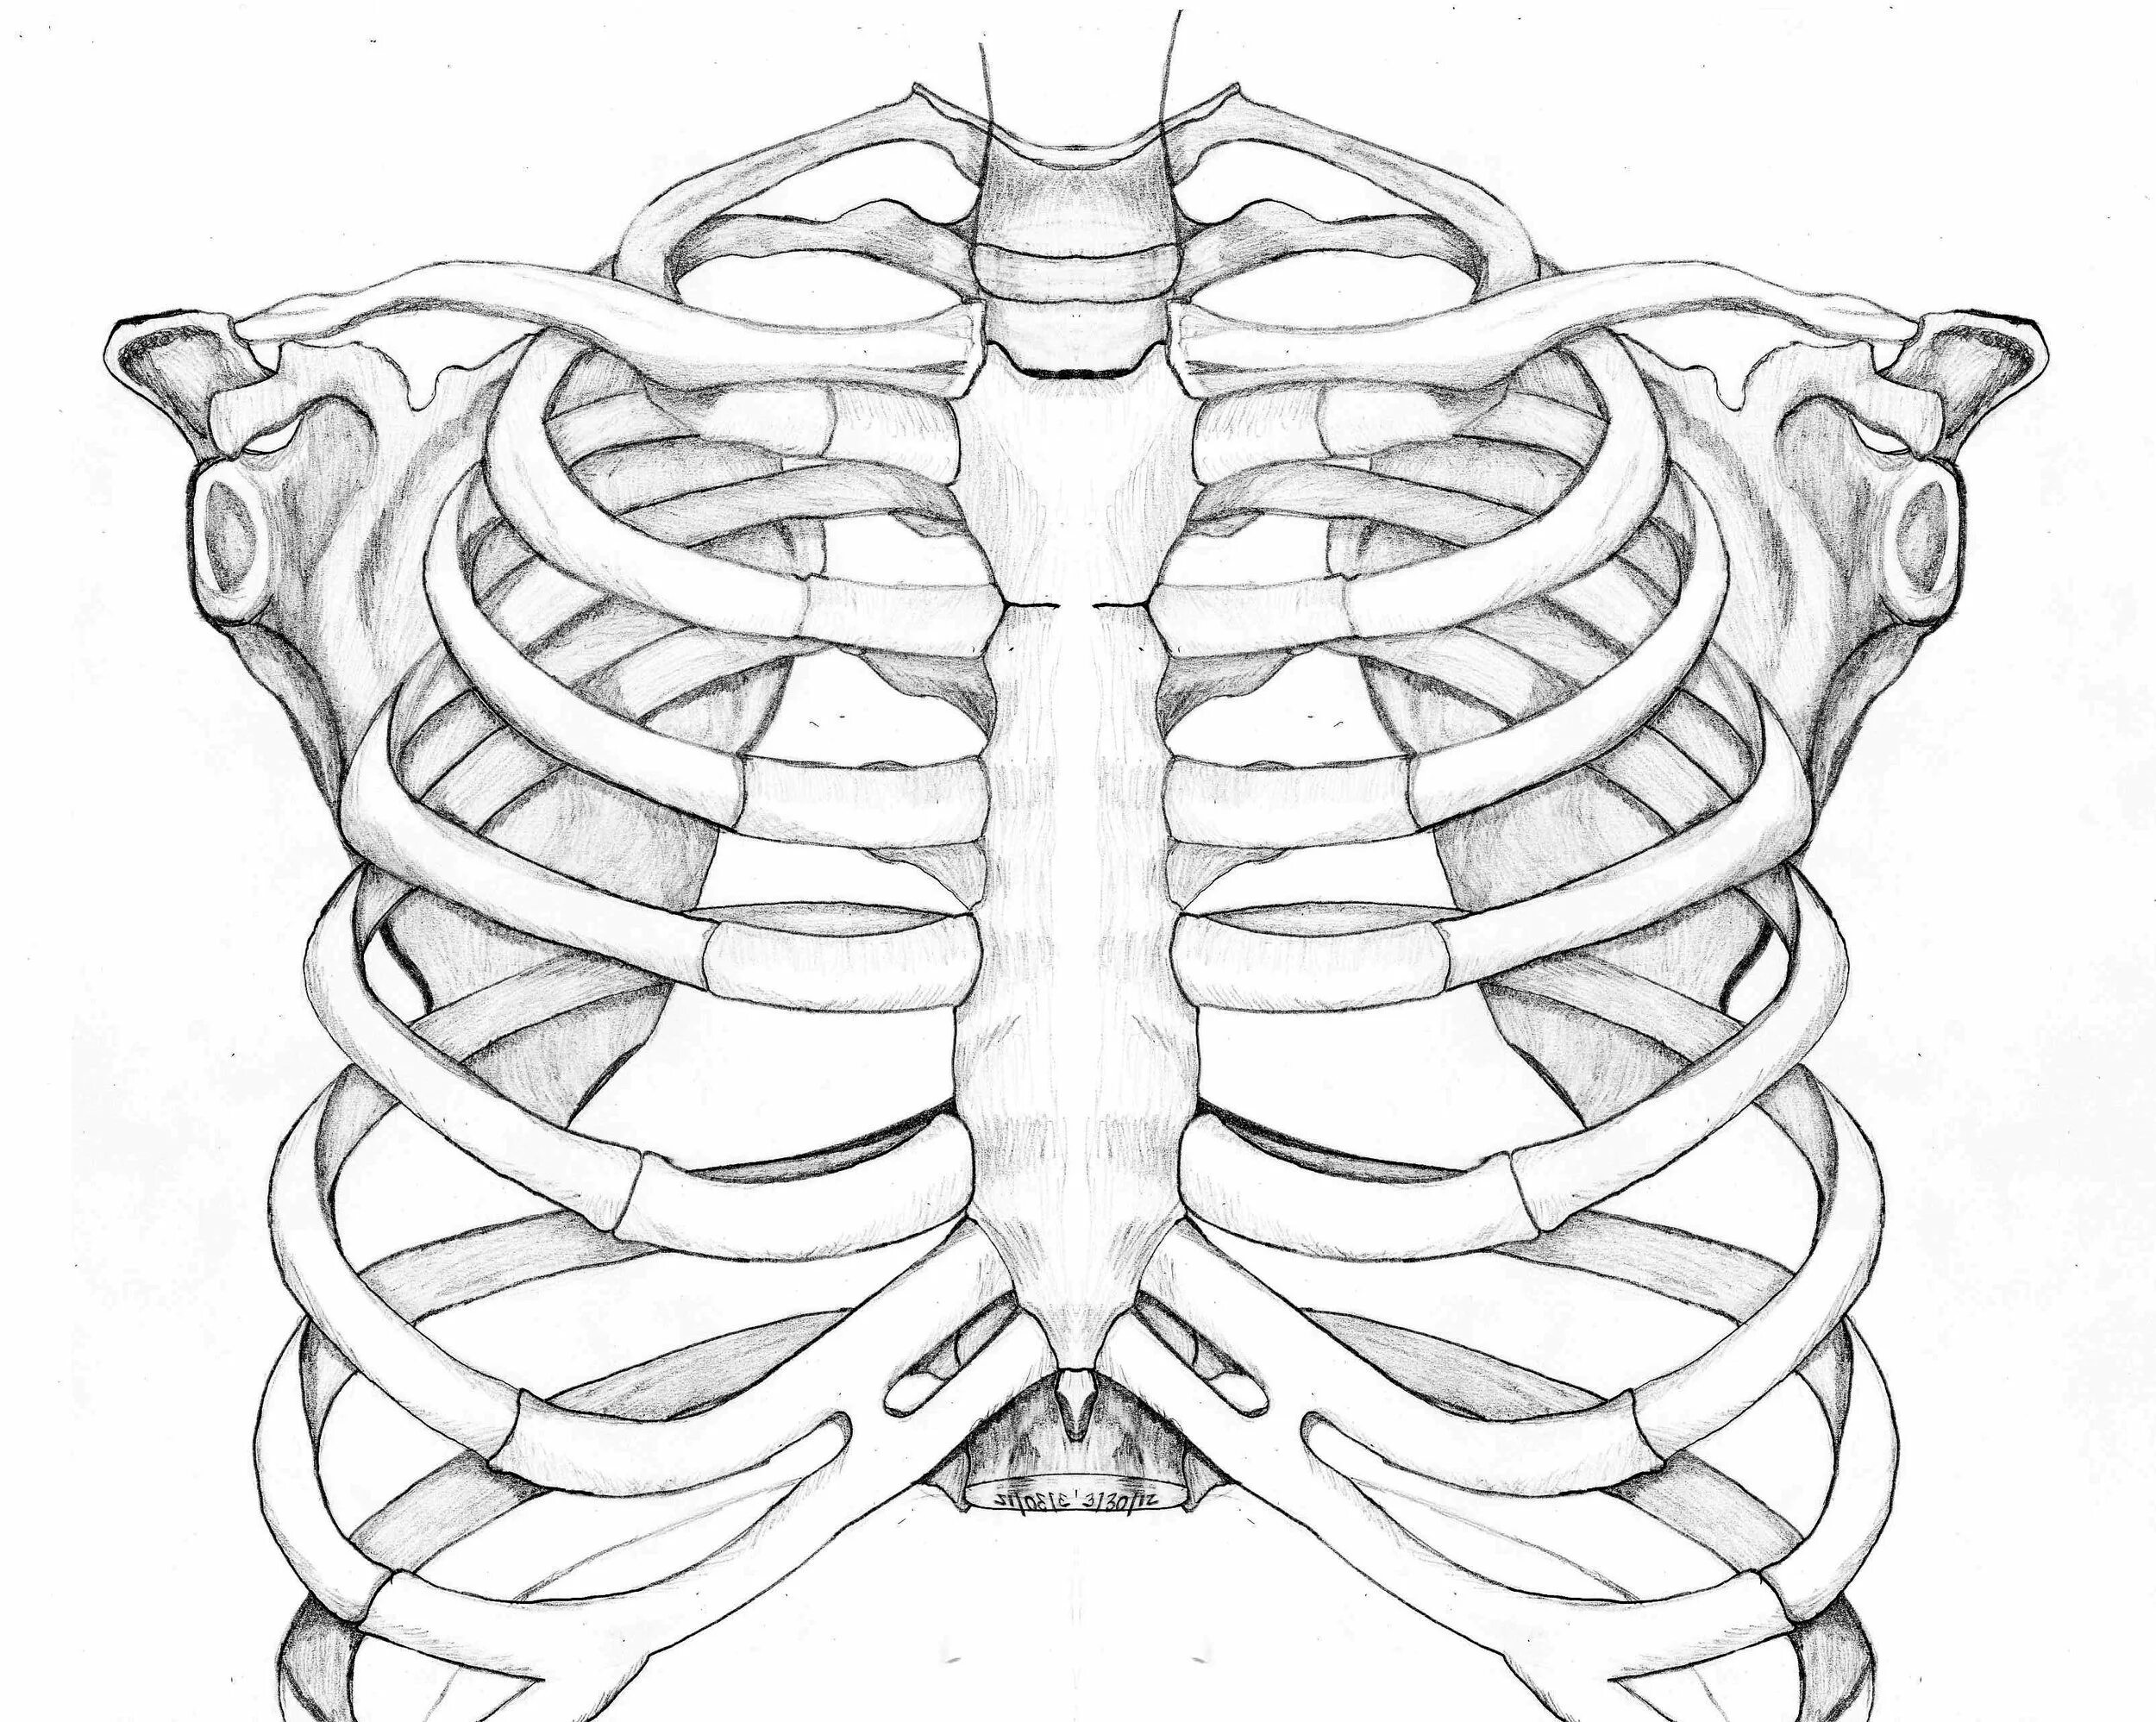 Анатомия скелет грудной клетки ребра Грудина. Ребра скелета референс. Грудная клетка с ребрами и грудиной. Грудная клетка скелет референс. Легкие между ребер